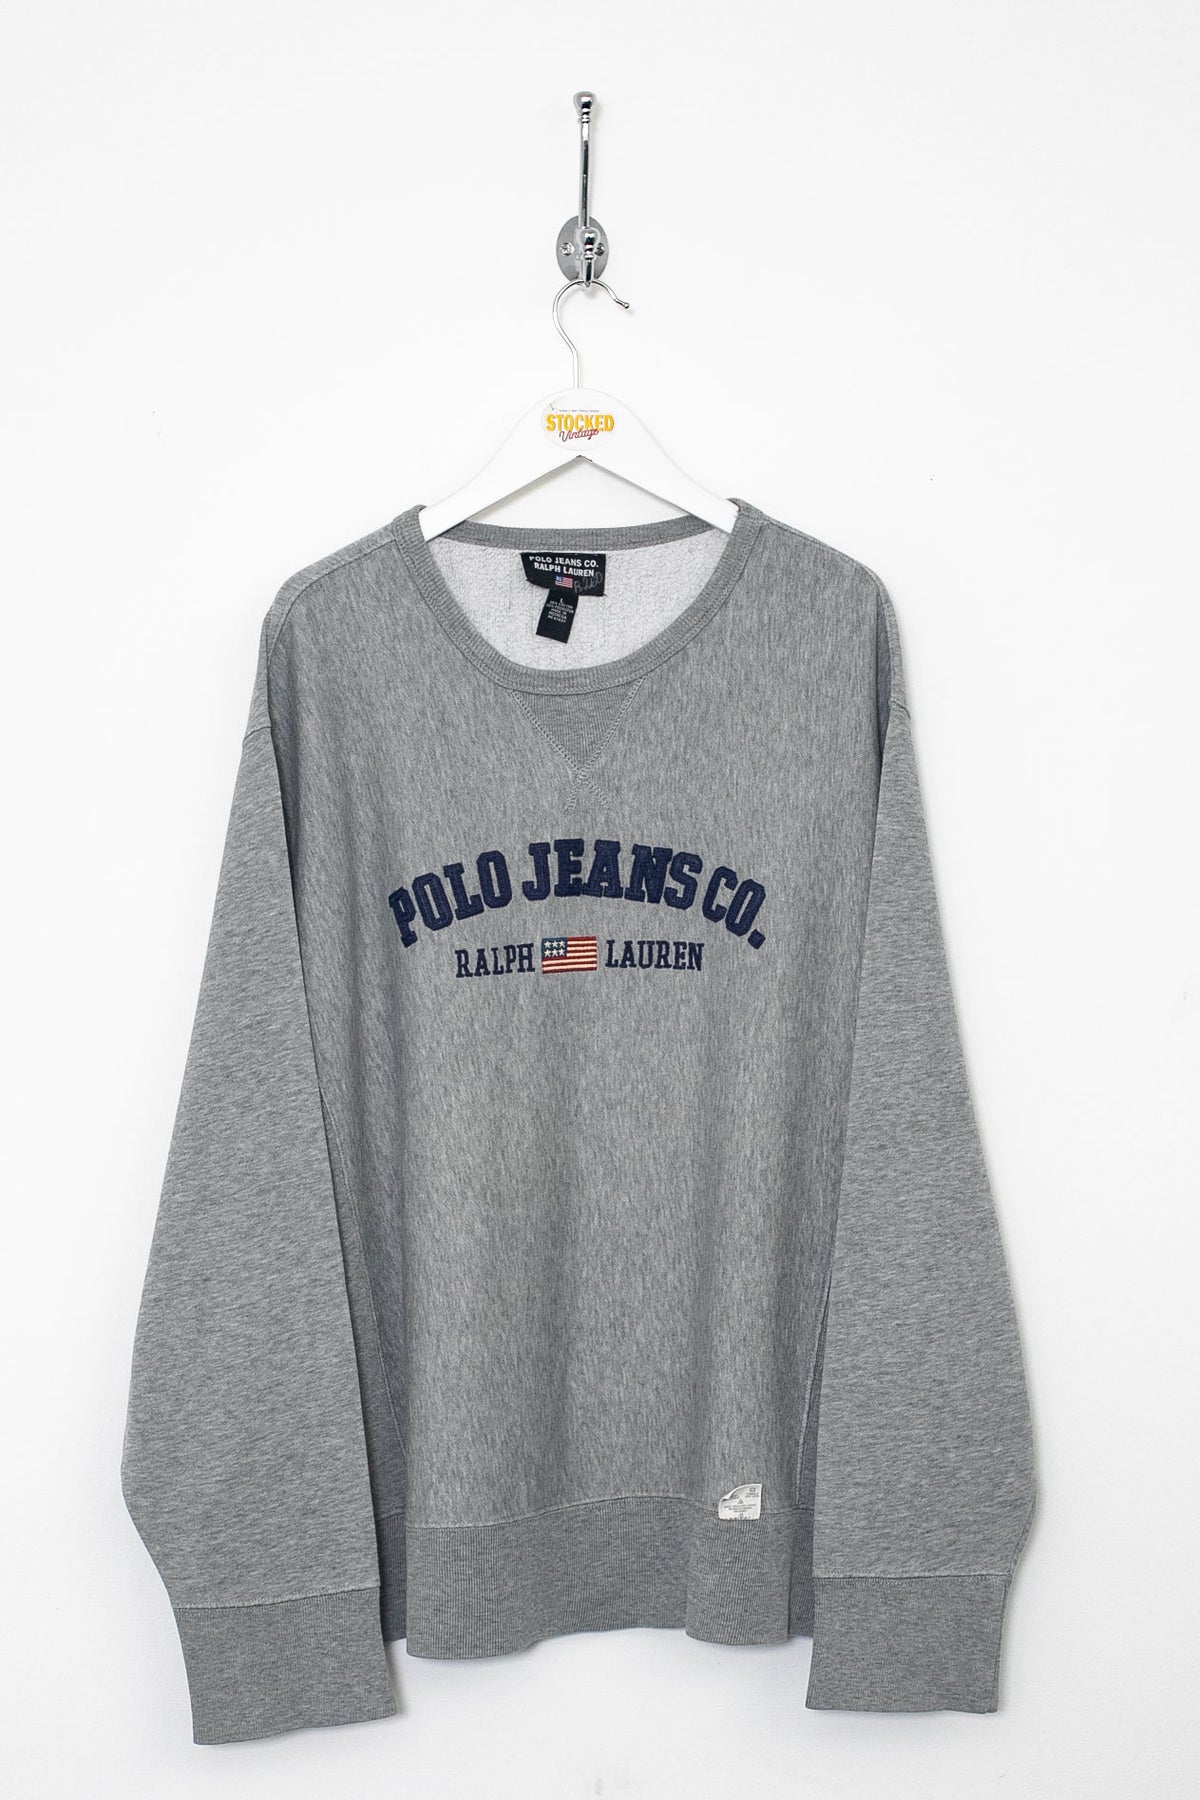 Vintage Polo Jeans Co Ralph Lauren Long Sleeve T Shirt Size XL